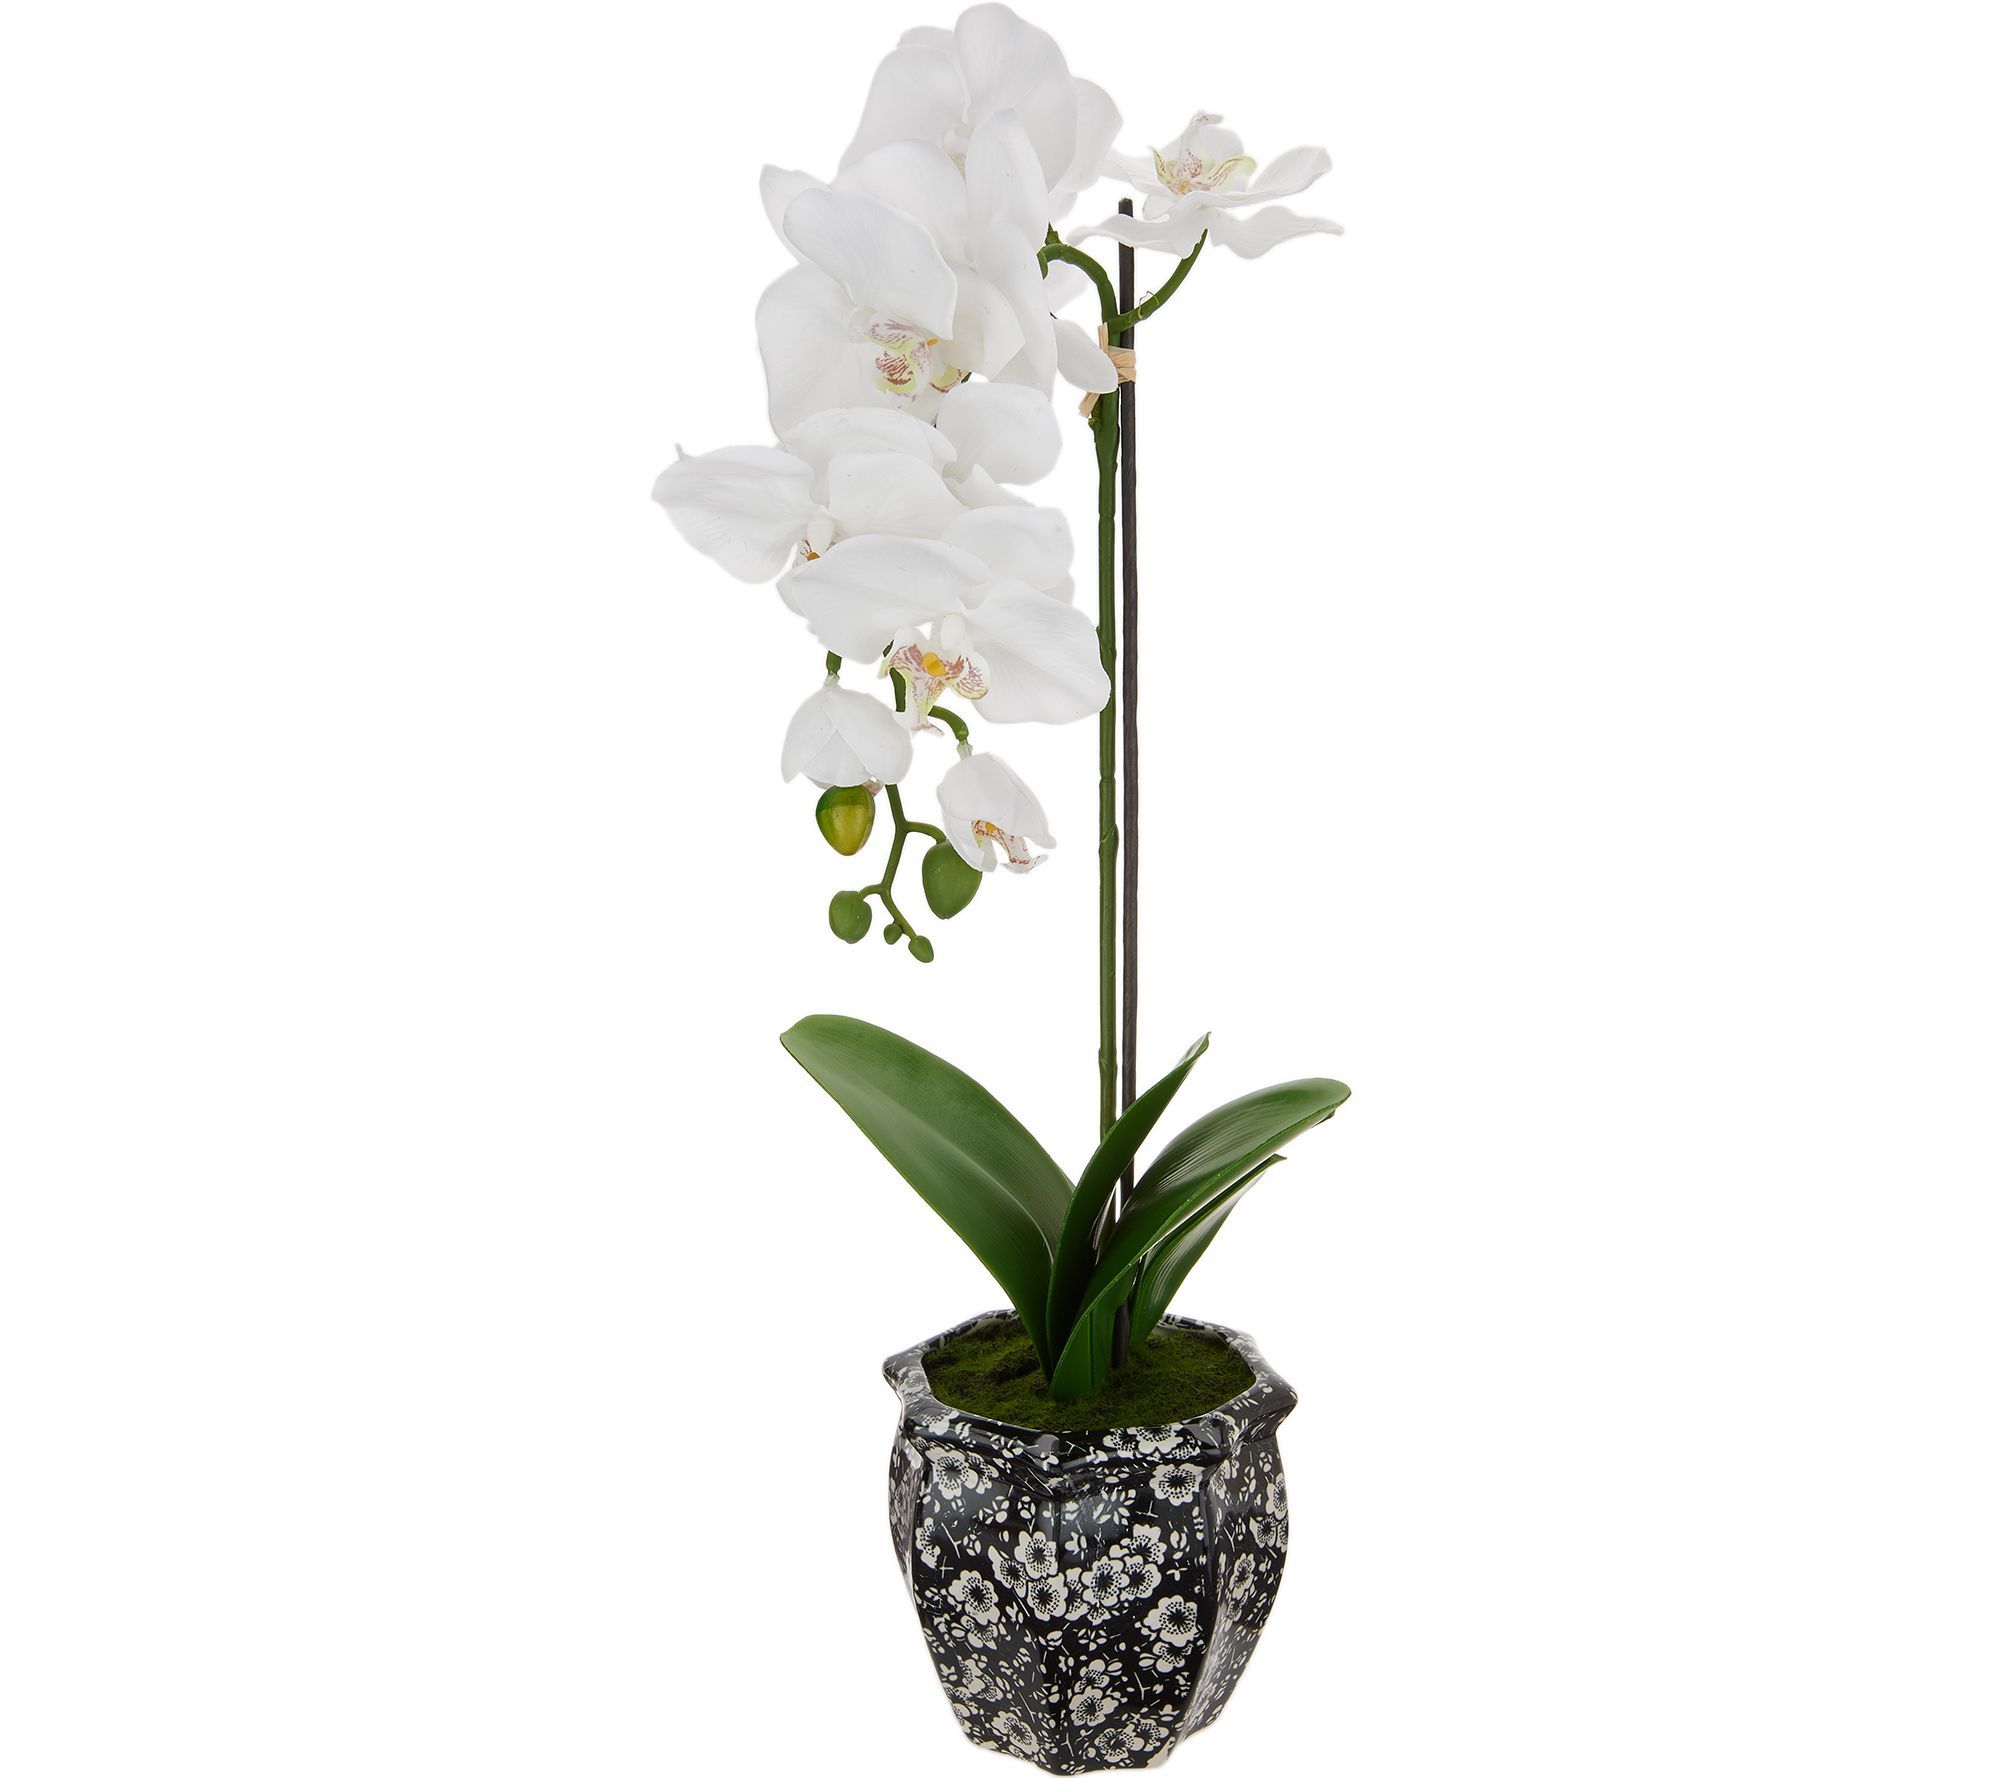 23" Faux Orchid Plant in Decorative Ceramic Pot by Valerie | QVC